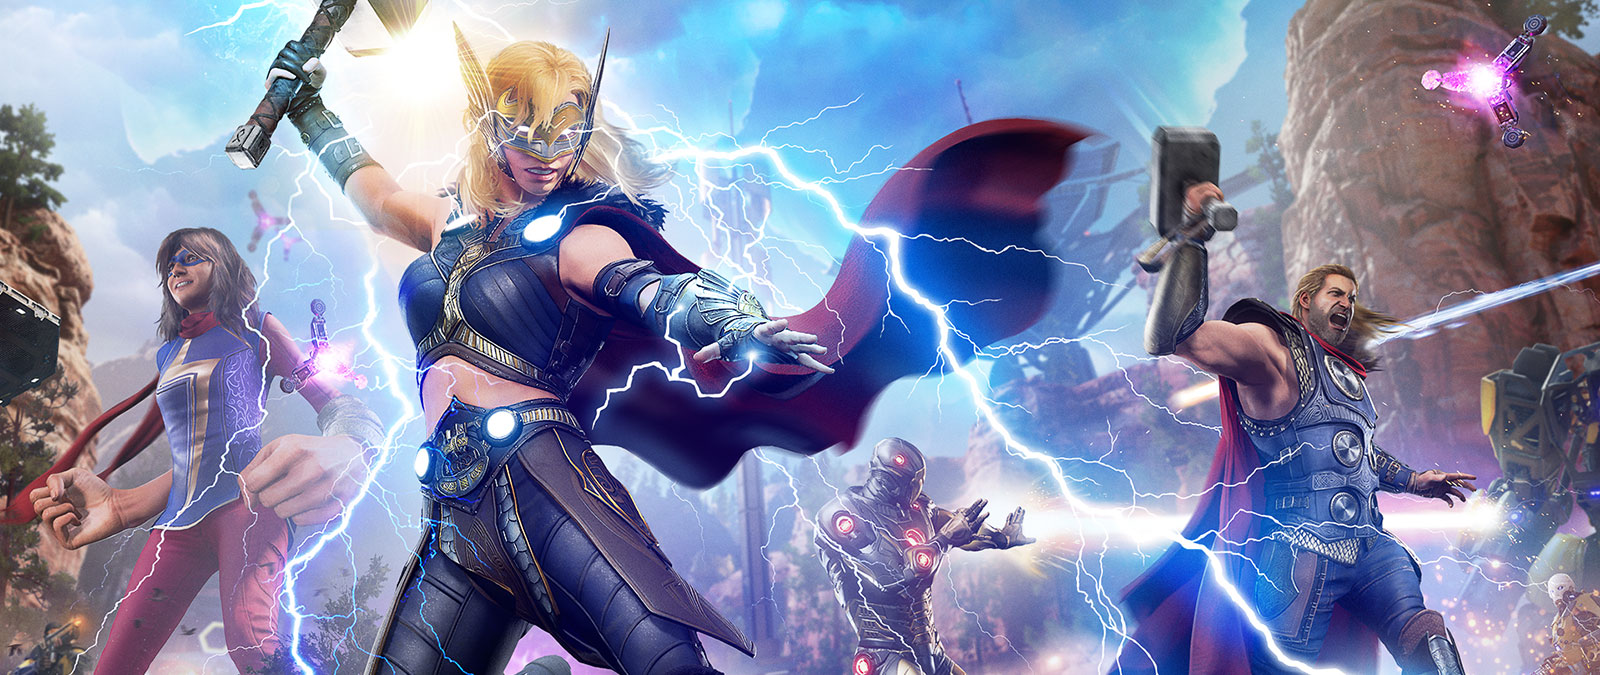 Jane Foster, ο Mighty Thor, ρίχνει κεραυνό σε έναν μηχανικό εχθρό.